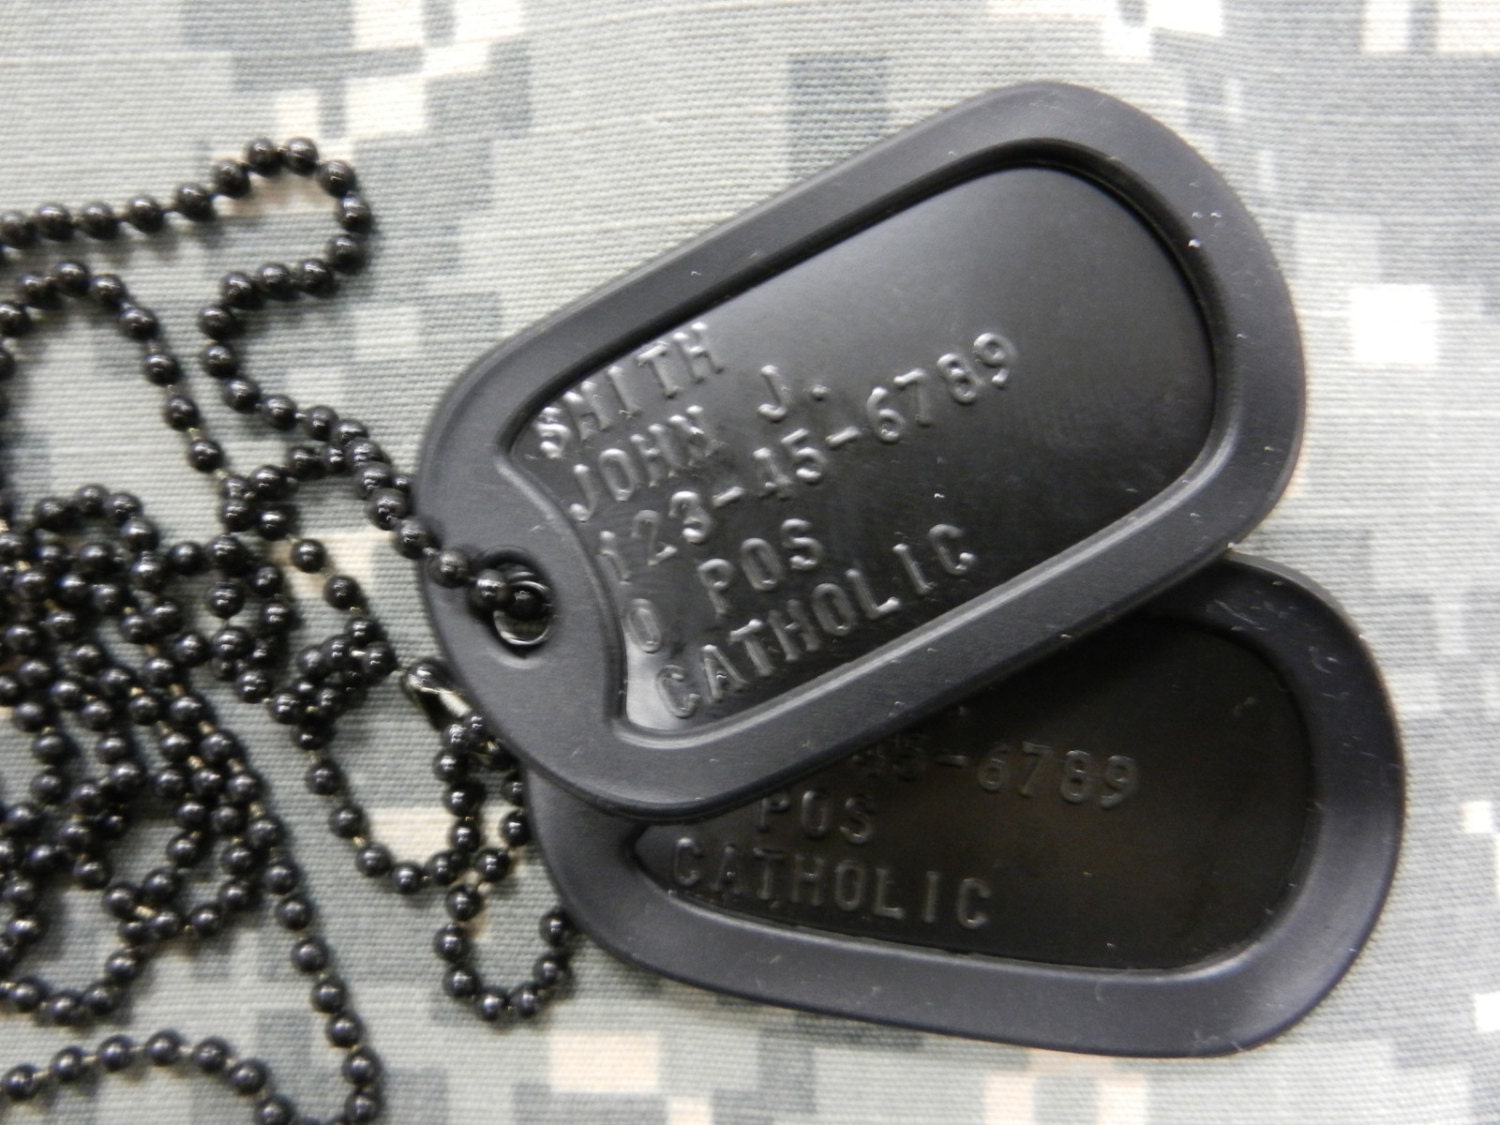 amazon military dog tags